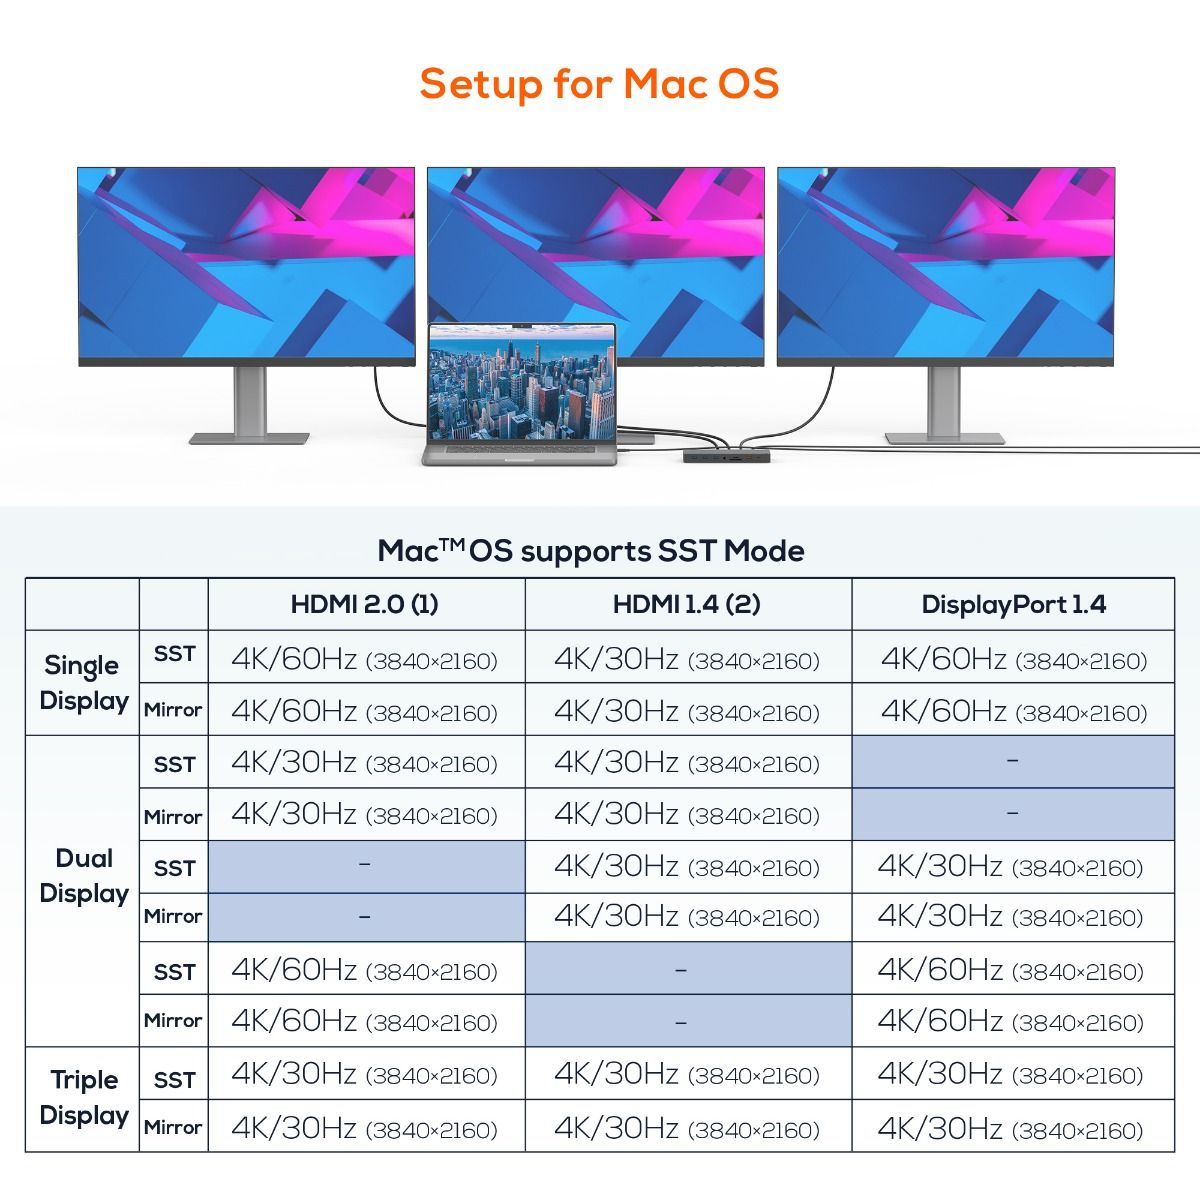 15-in-1 Triple Display USB-C Dock: Streamline Your Workstation Setup